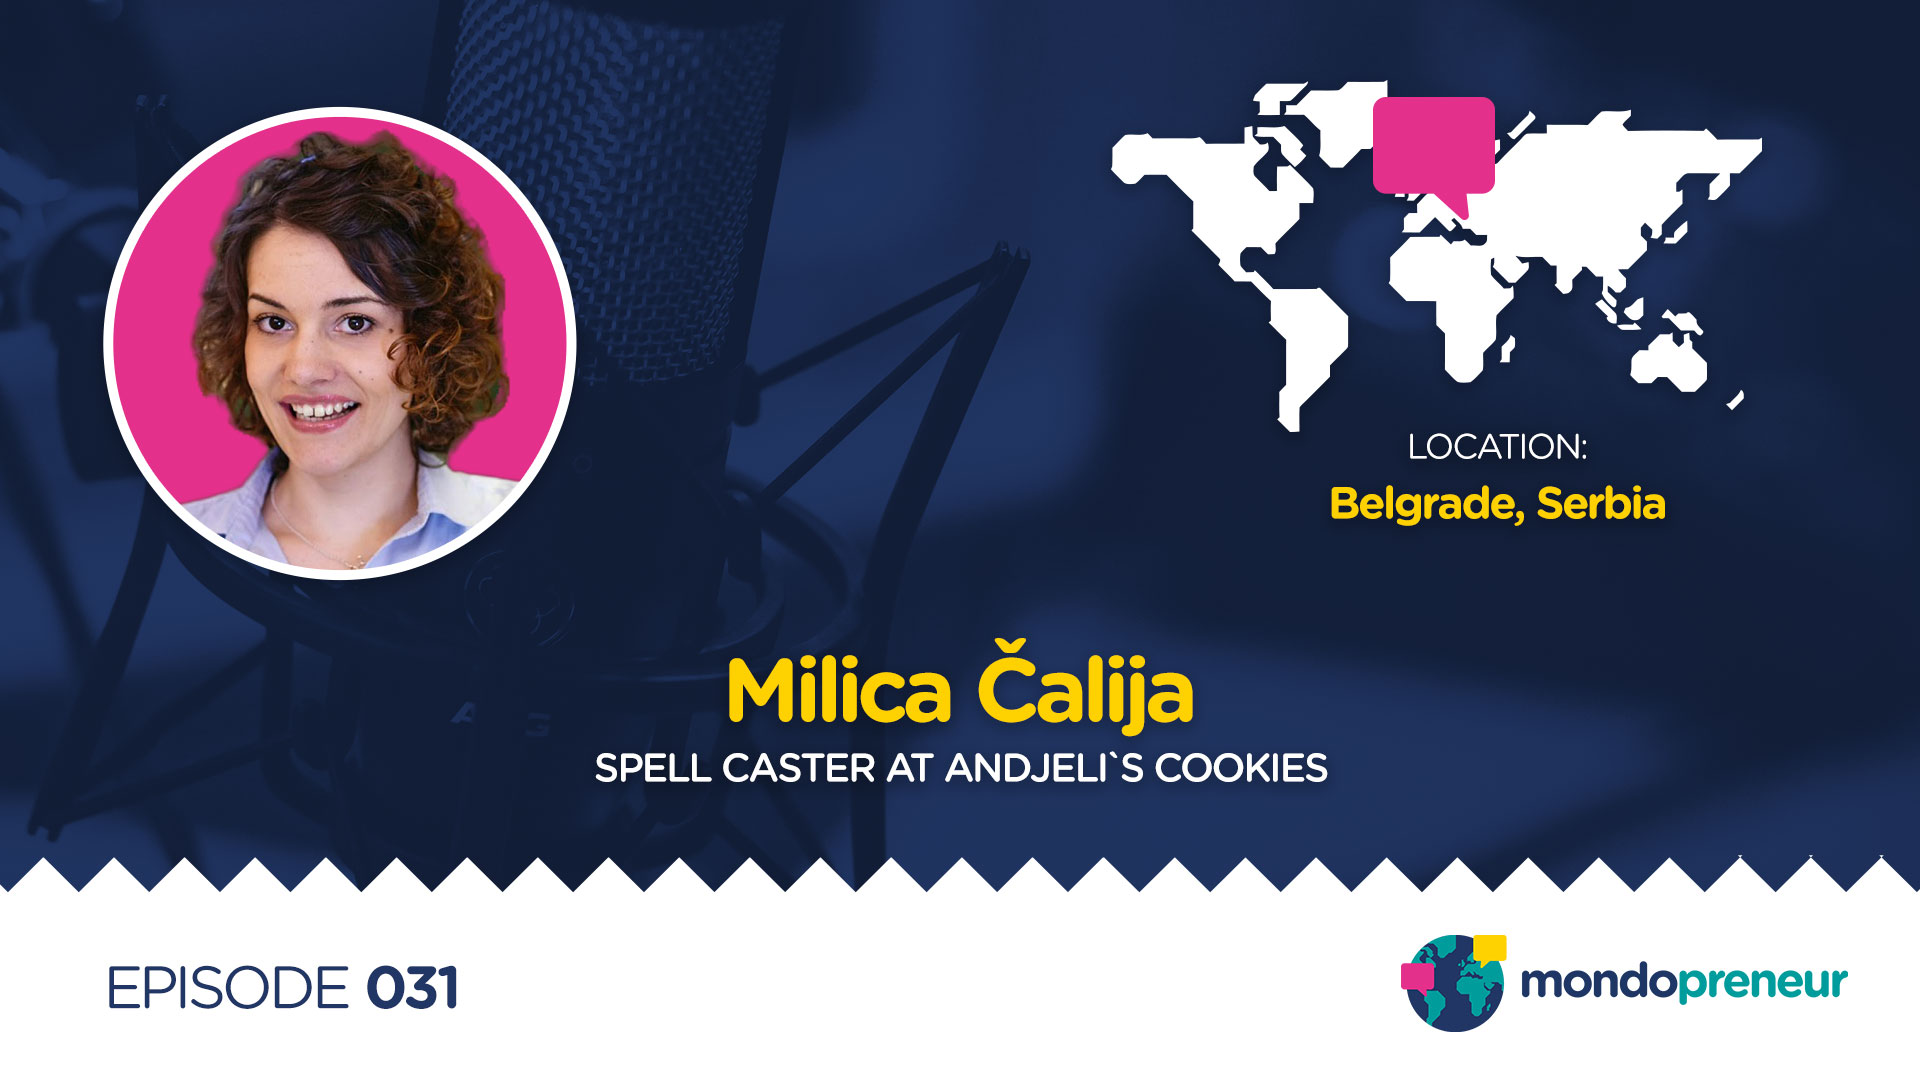 EP031: Milica Čalija, Spell caster at Andjeli`s cookies from Serbia